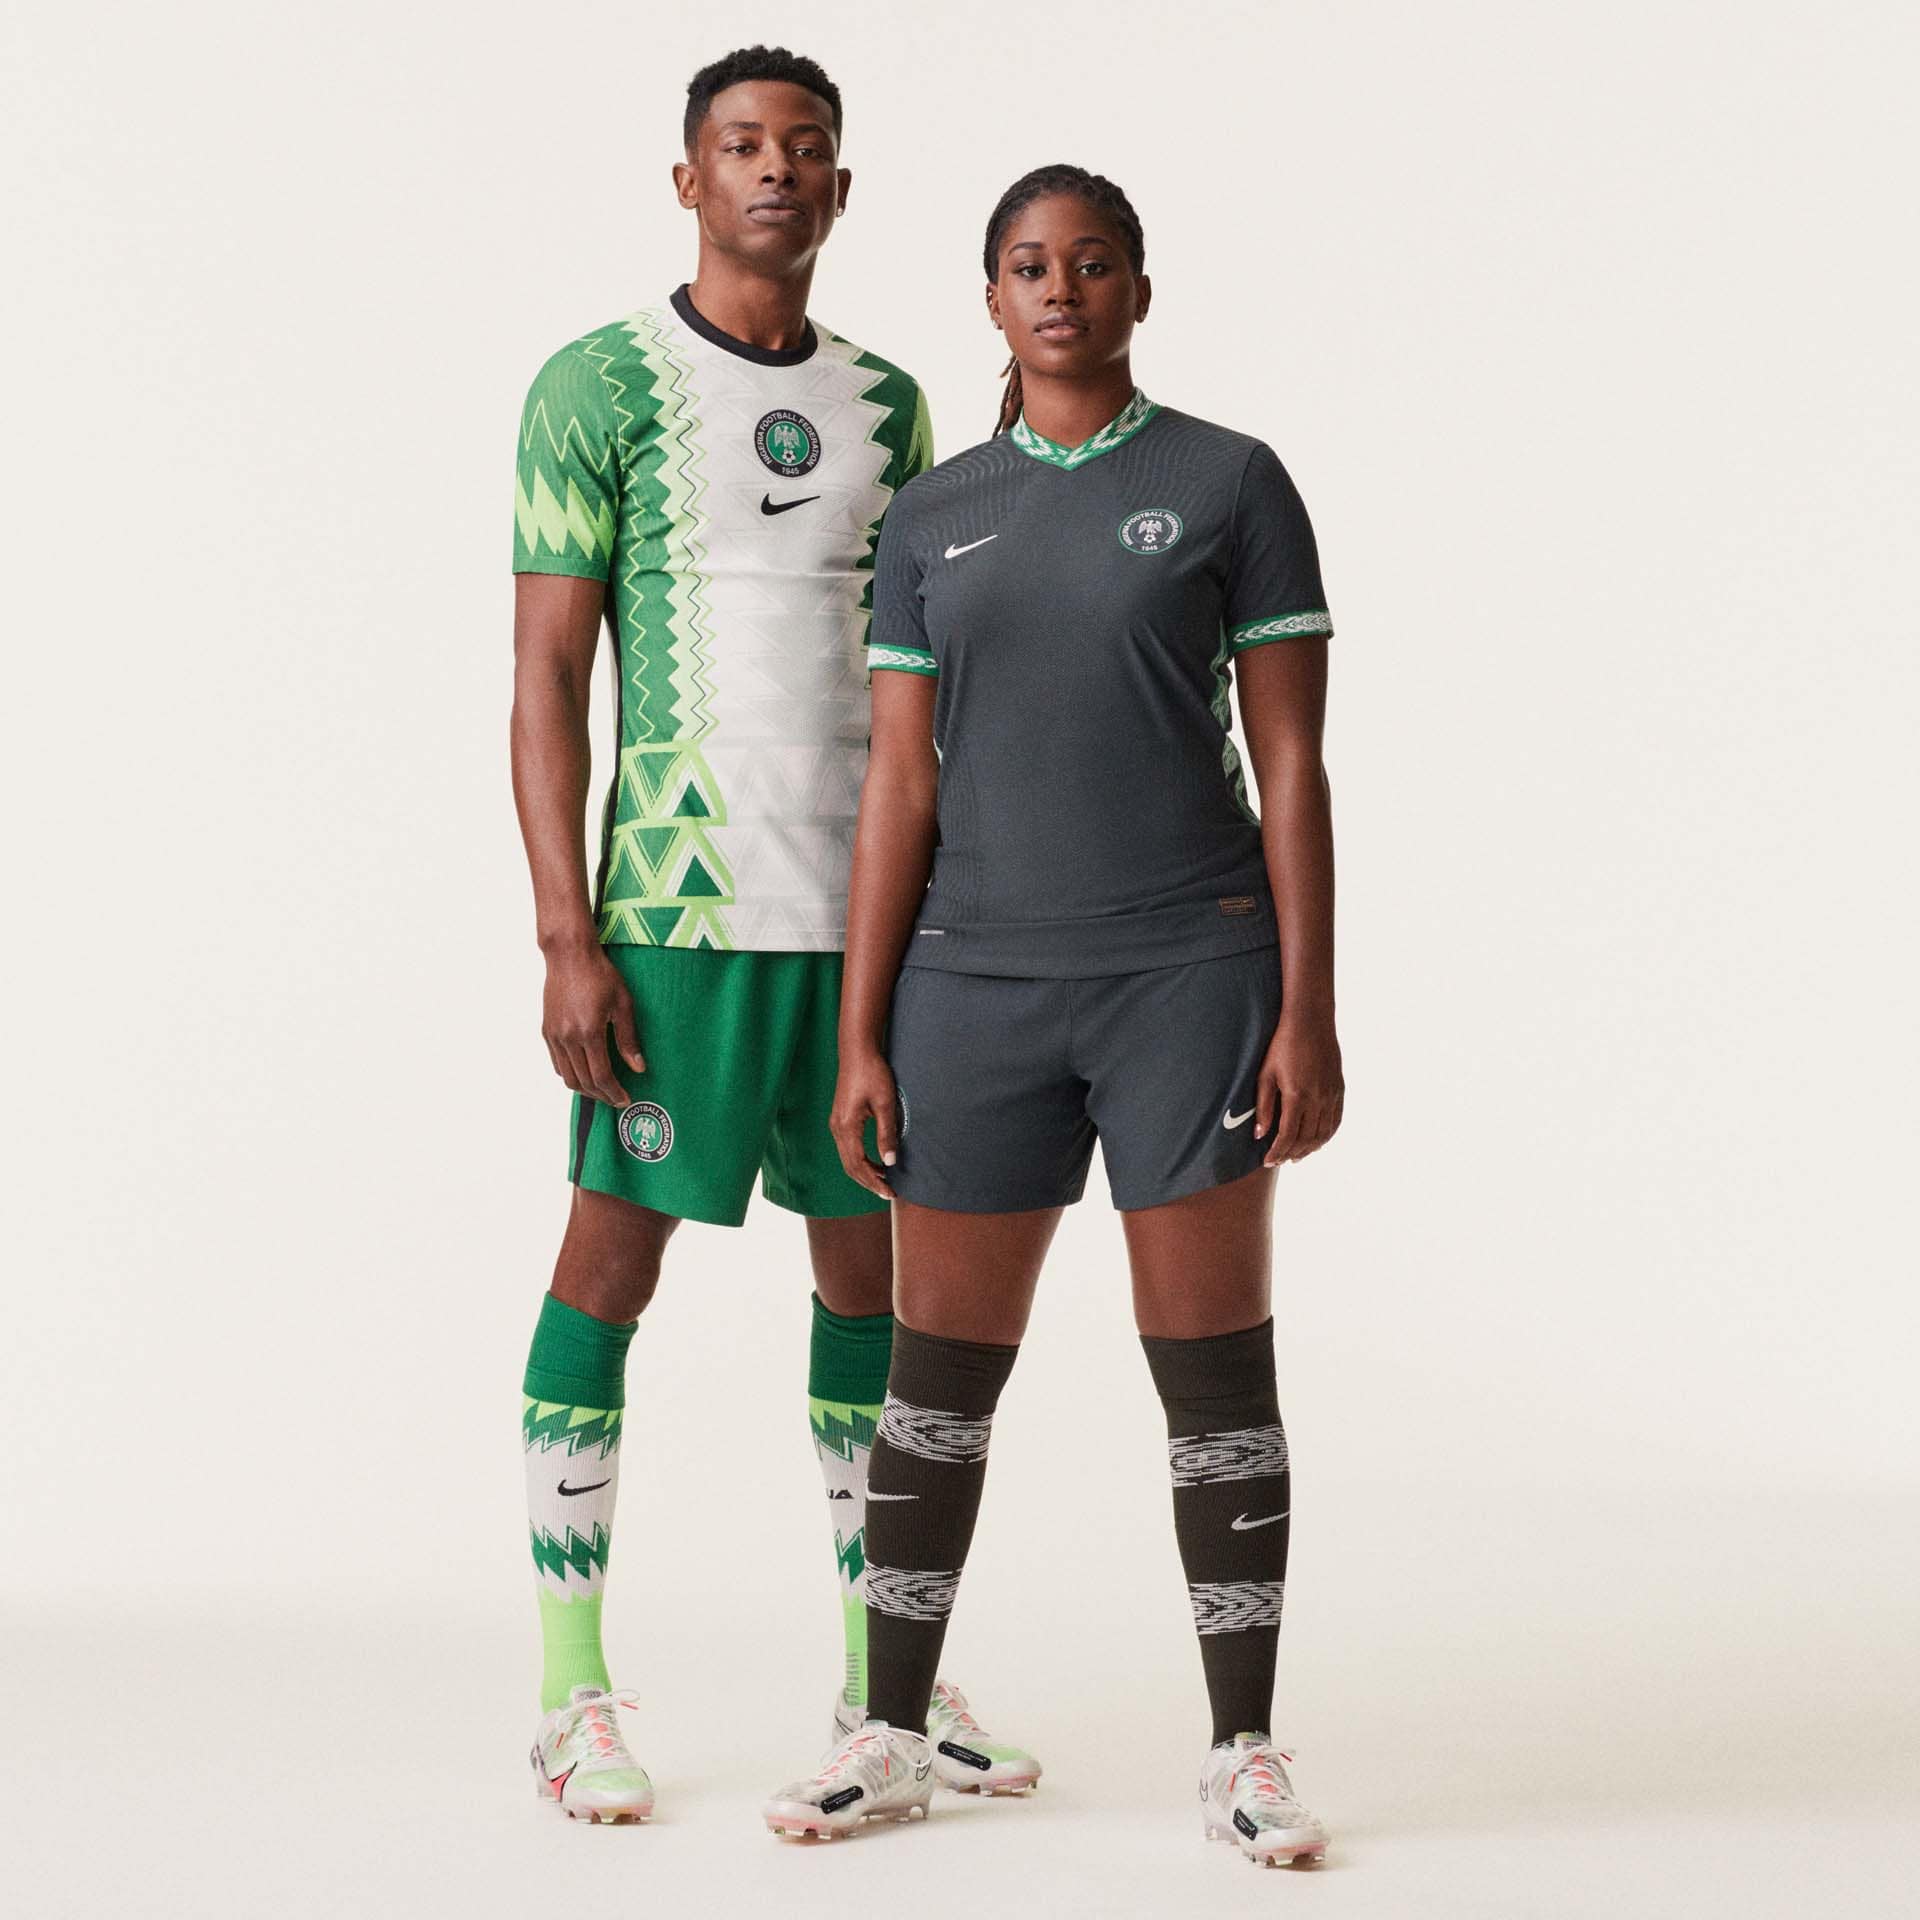 Todo Sobre Camisetas on Twitter: "🇳🇬 @nikefootball ha presentado las nuevas Nigeria 2020: https://t.co/6nZfDkNUe6 https://t.co/PKh9qyOjKc" / Twitter